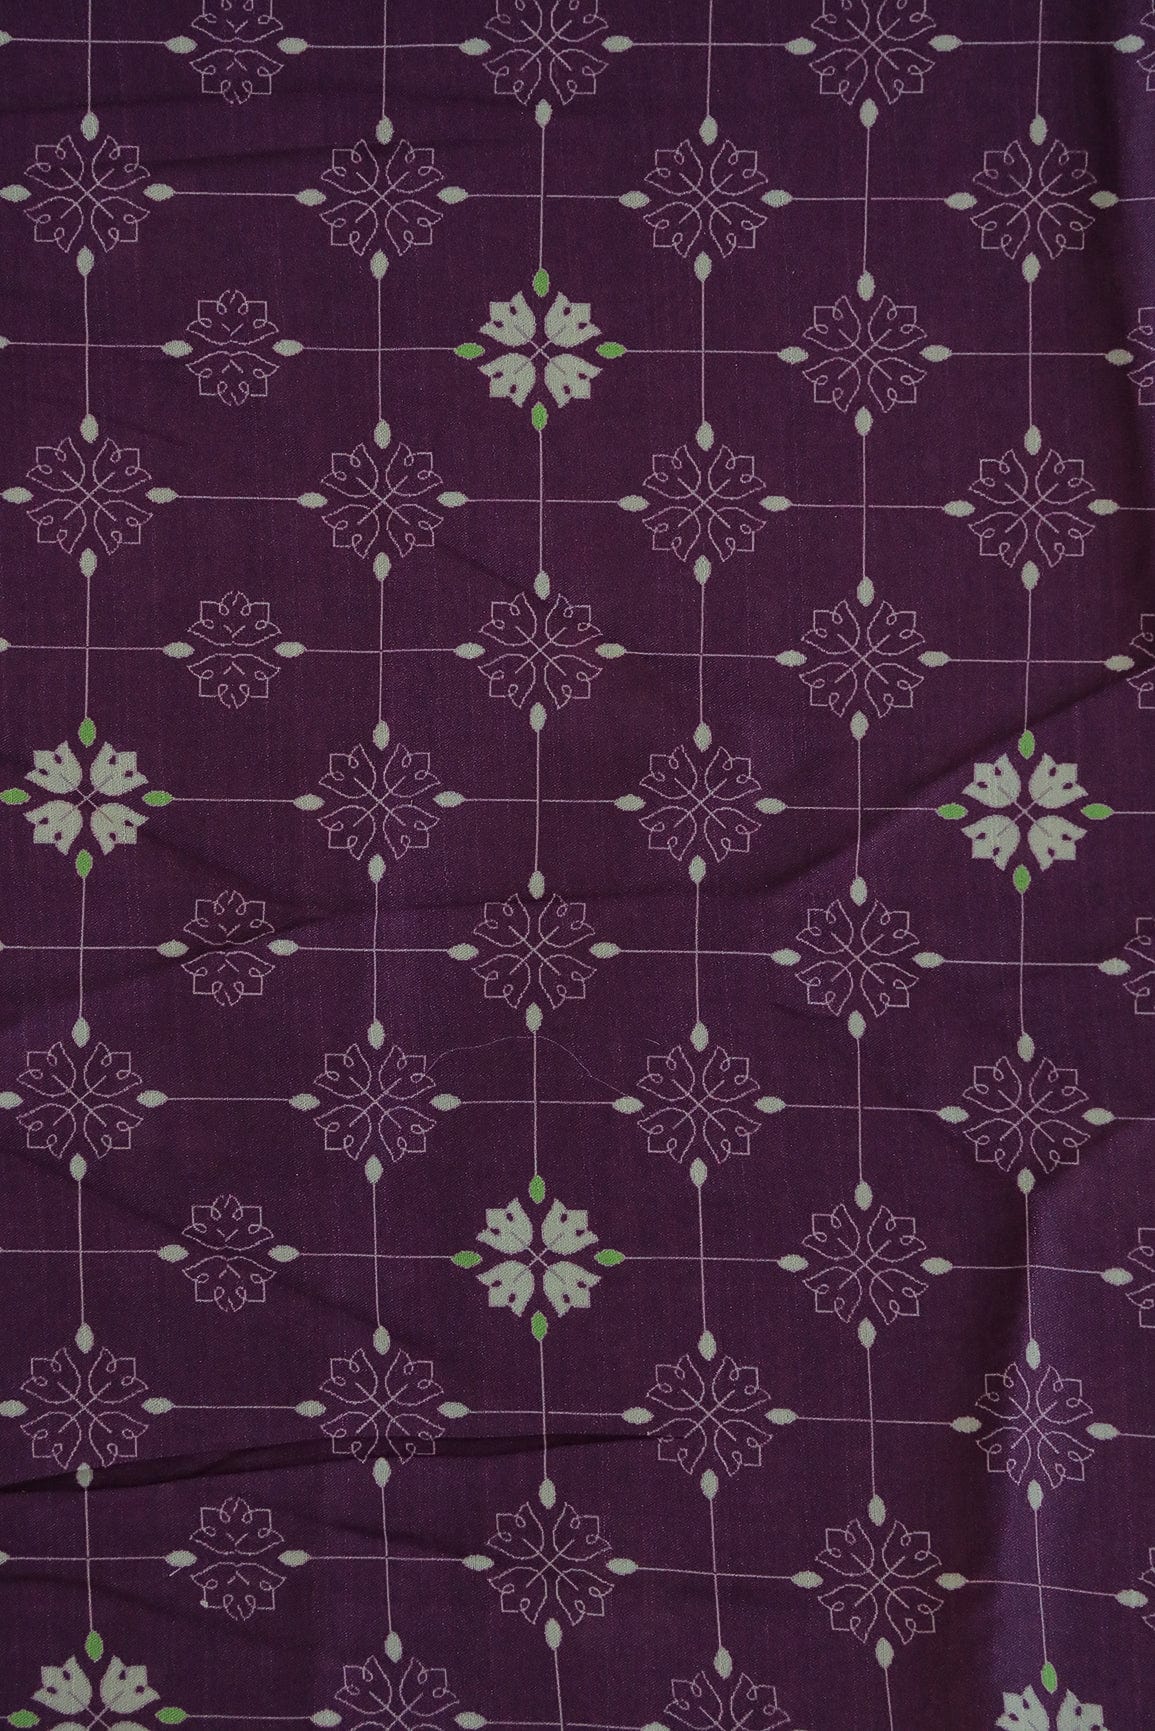 doeraa Prints Purple Floral Geometric Digital Print on Tussar Satin Fabric